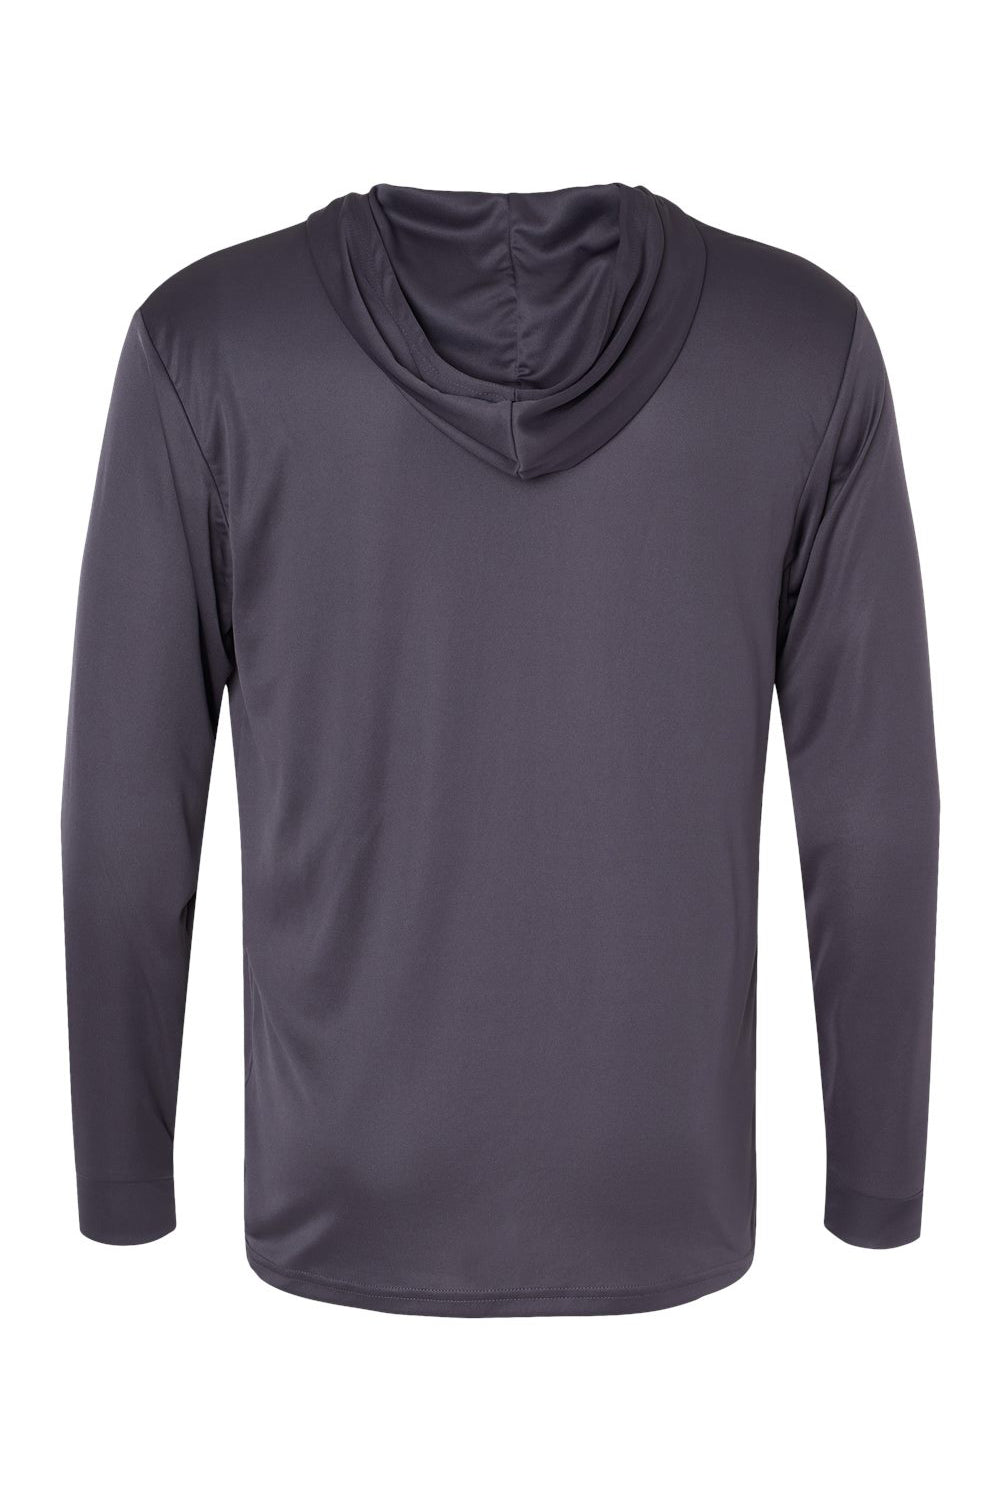 Paragon 220 Mens Bahama Performance Long Sleeve Hooded T-Shirt Hoodie Graphite Grey Flat Back